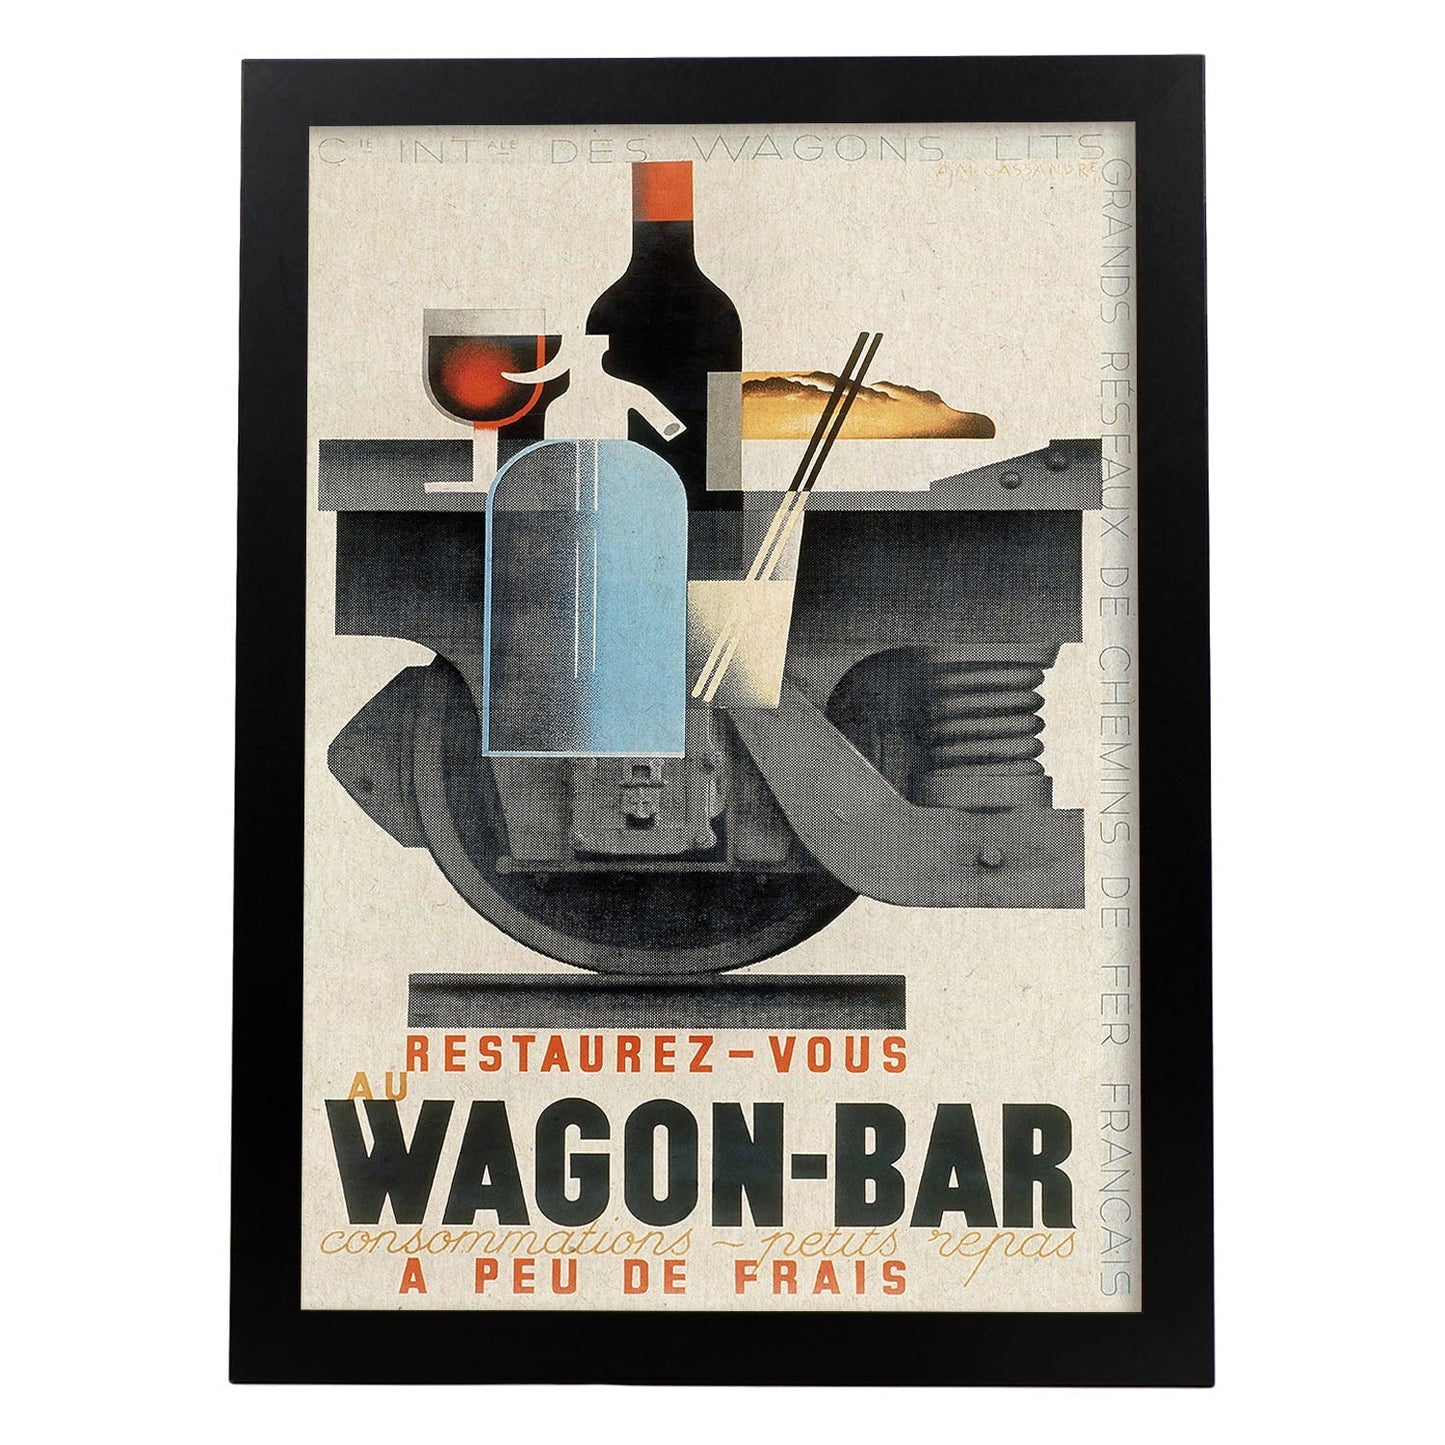 Poster vintage. Cartel vintage anuncio Wagon-Bar a Peu de Frais.-Artwork-Nacnic-A4-Marco Negro-Nacnic Estudio SL